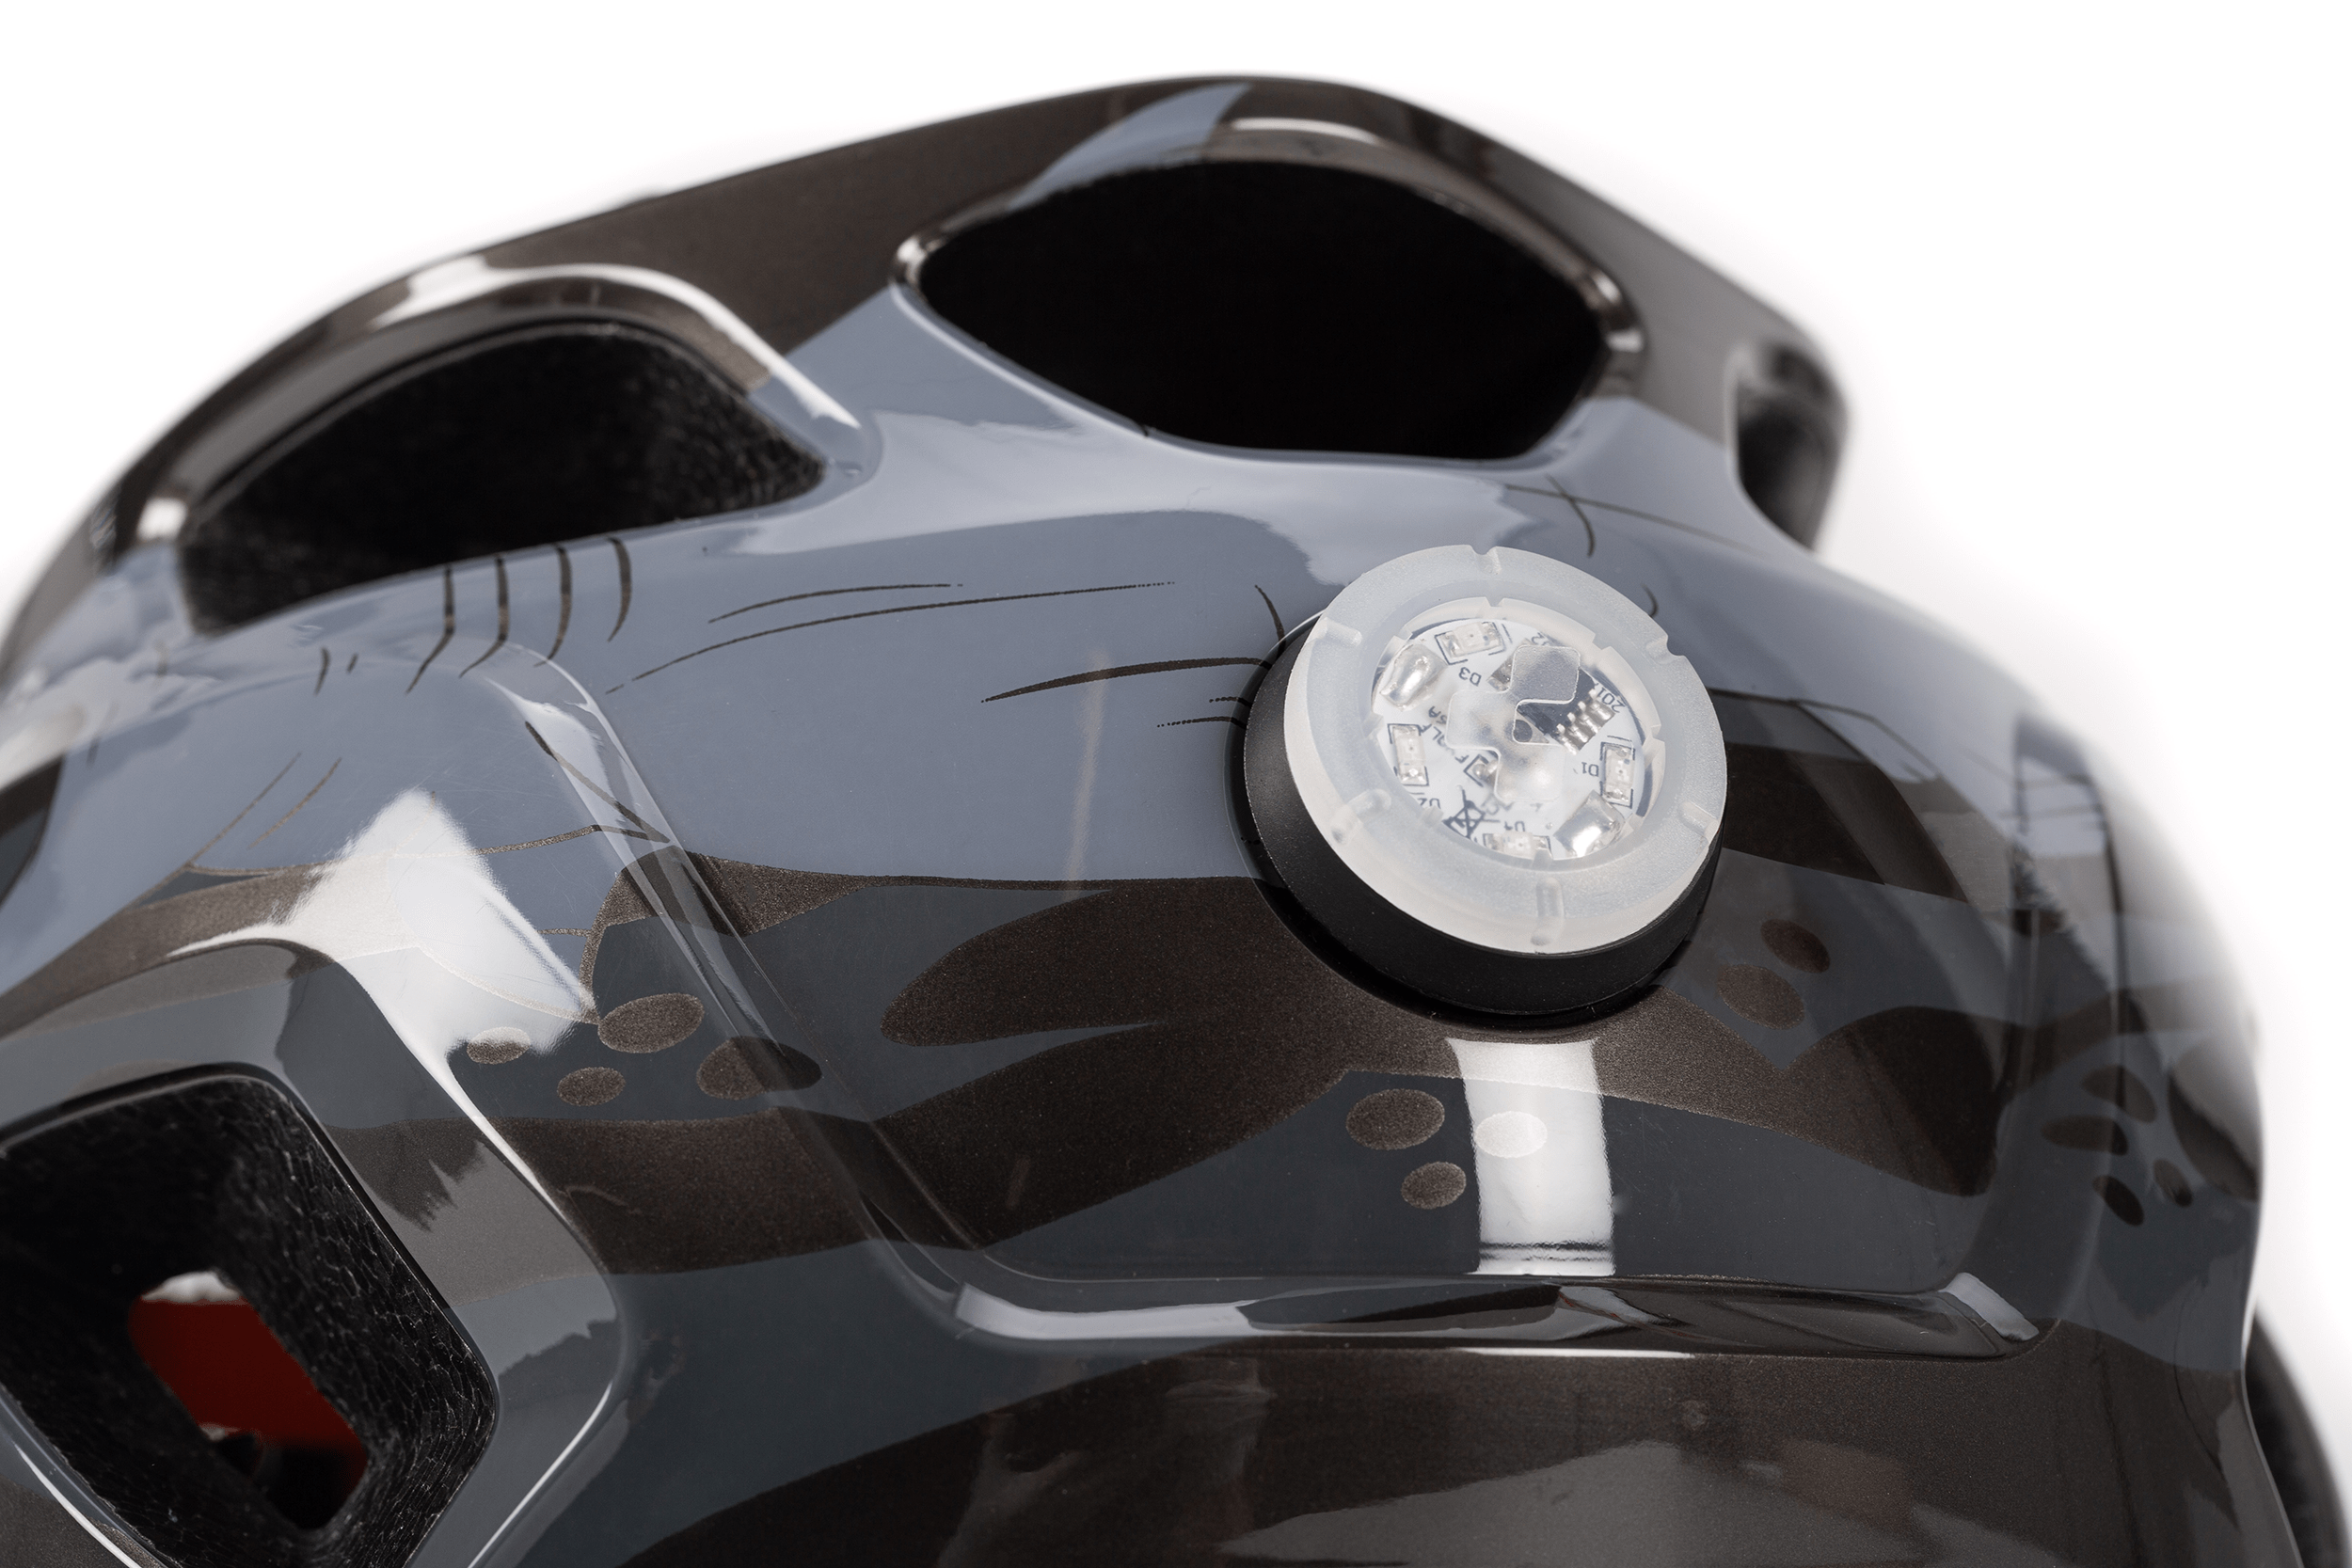 Bild von Fahrrad CUBE Helm ANT black Helme 12